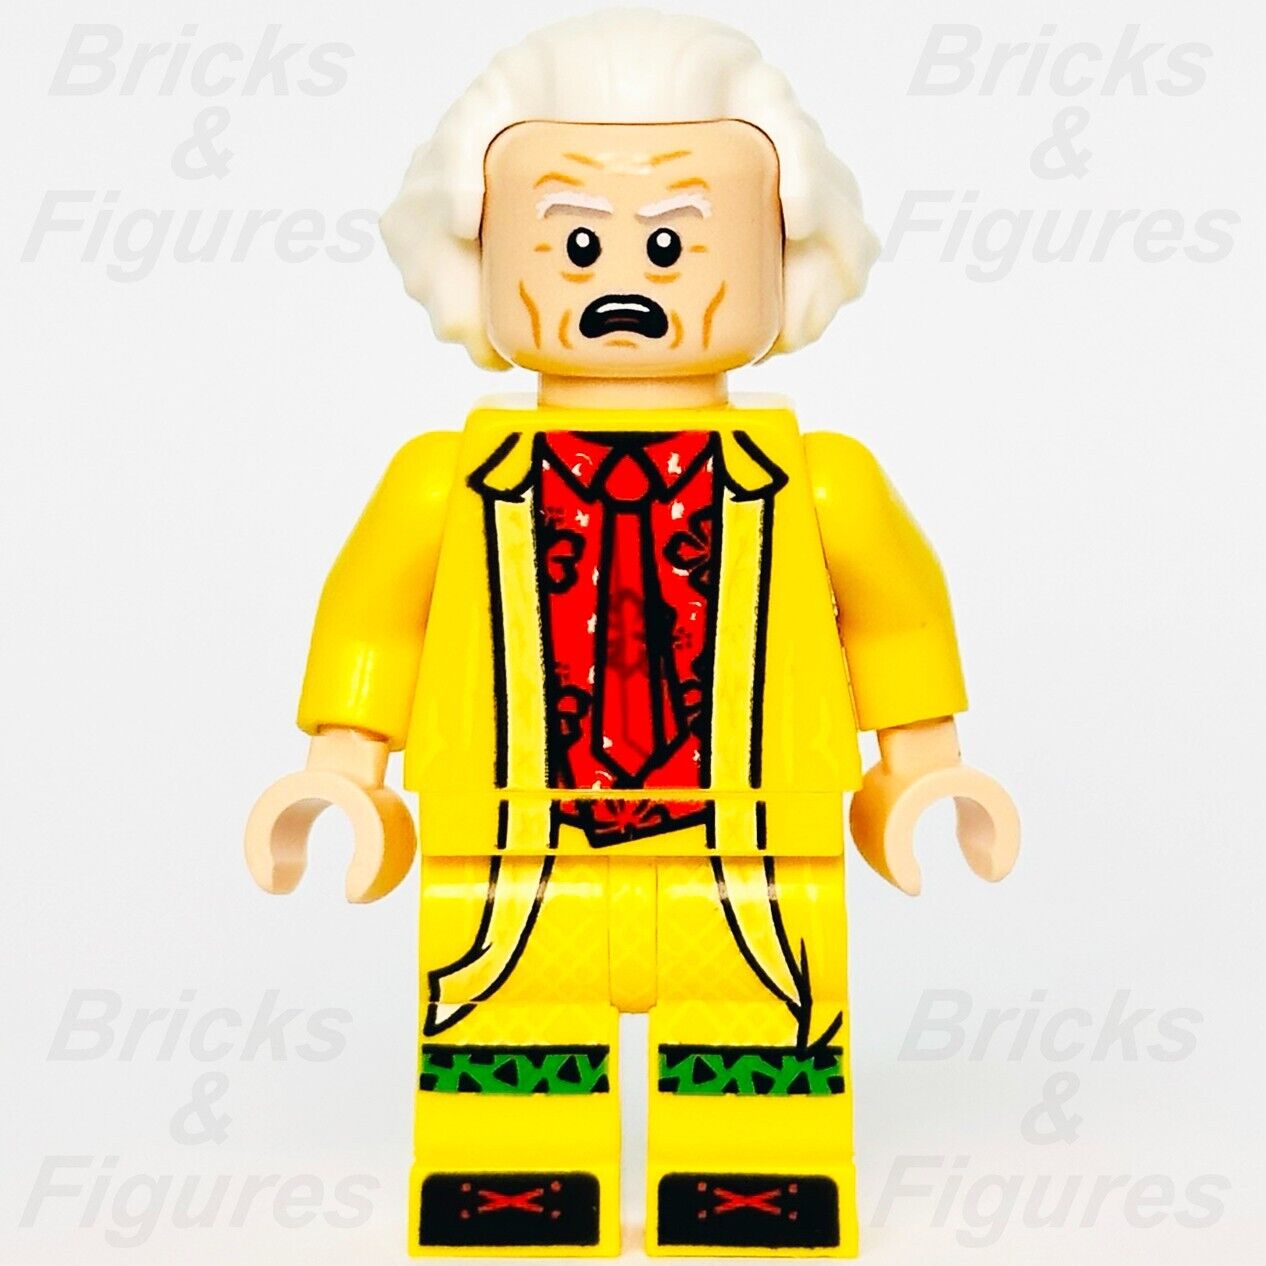 LEGO Doc Brown Minifigure Back to the Future Creator Expert 10300 btf002 New - Bricks & Figures